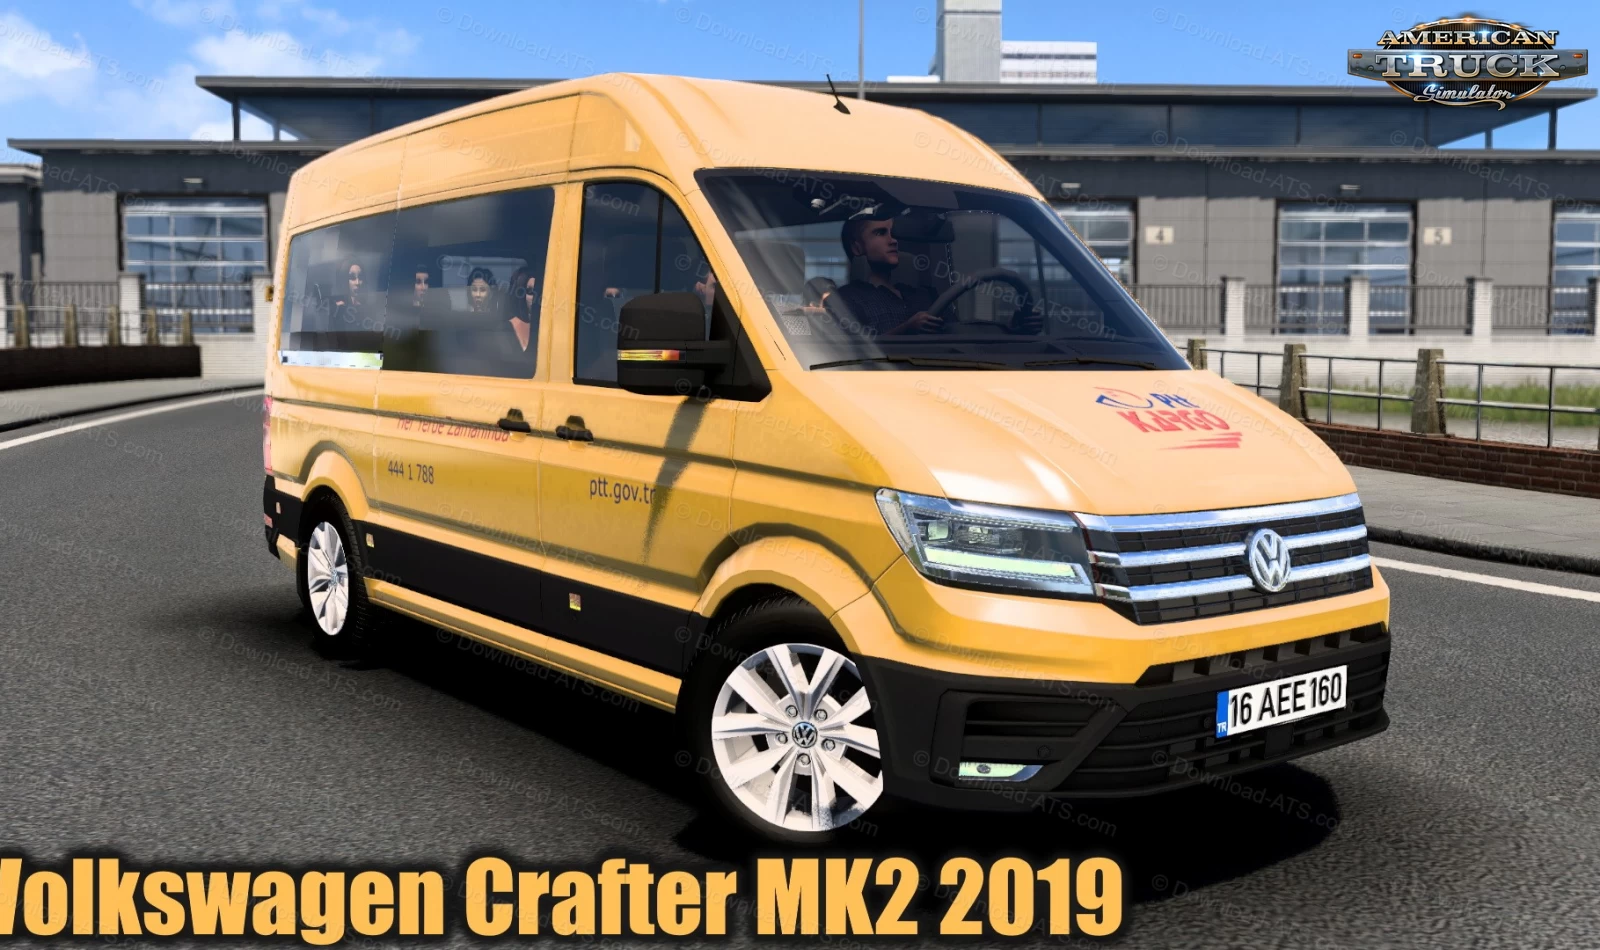 Volkswagen Crafter MK2 2019 v2.1 (1.45.x) for ATS